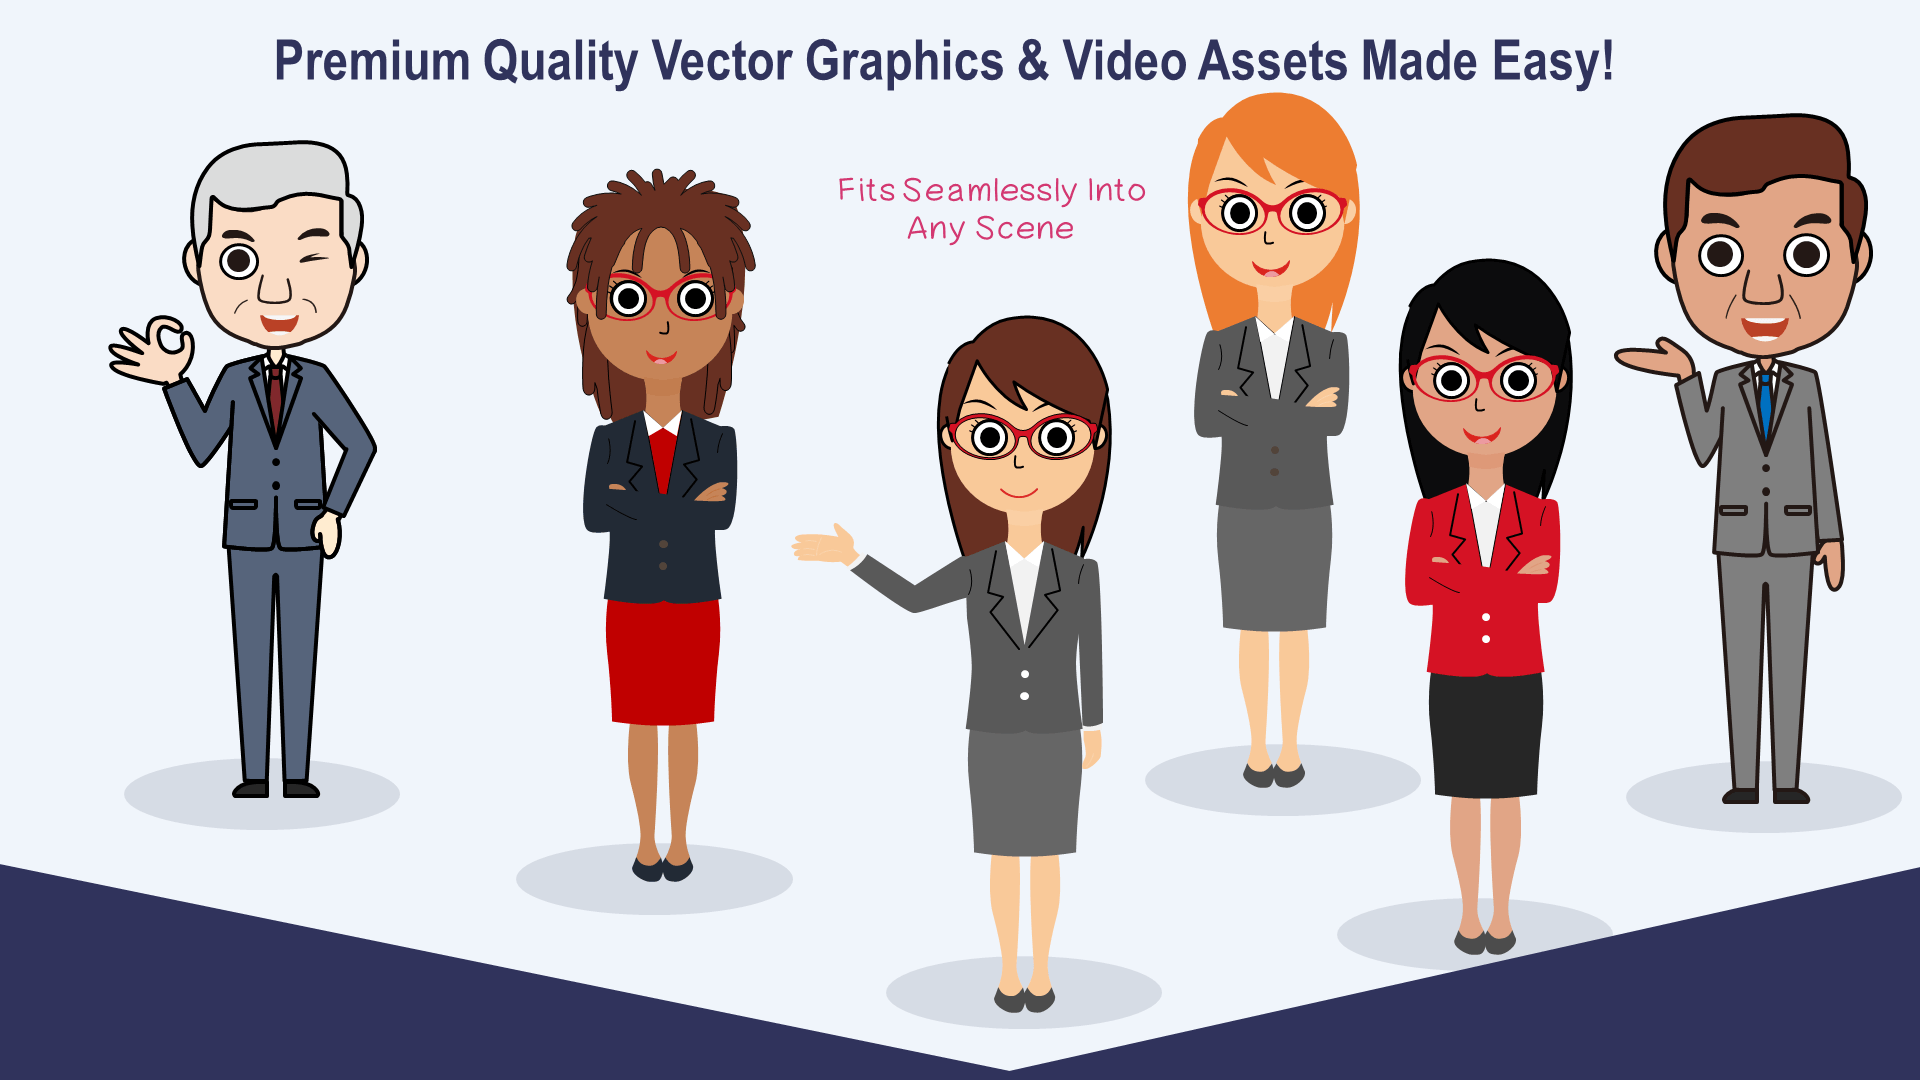 Premium Quality Vectors